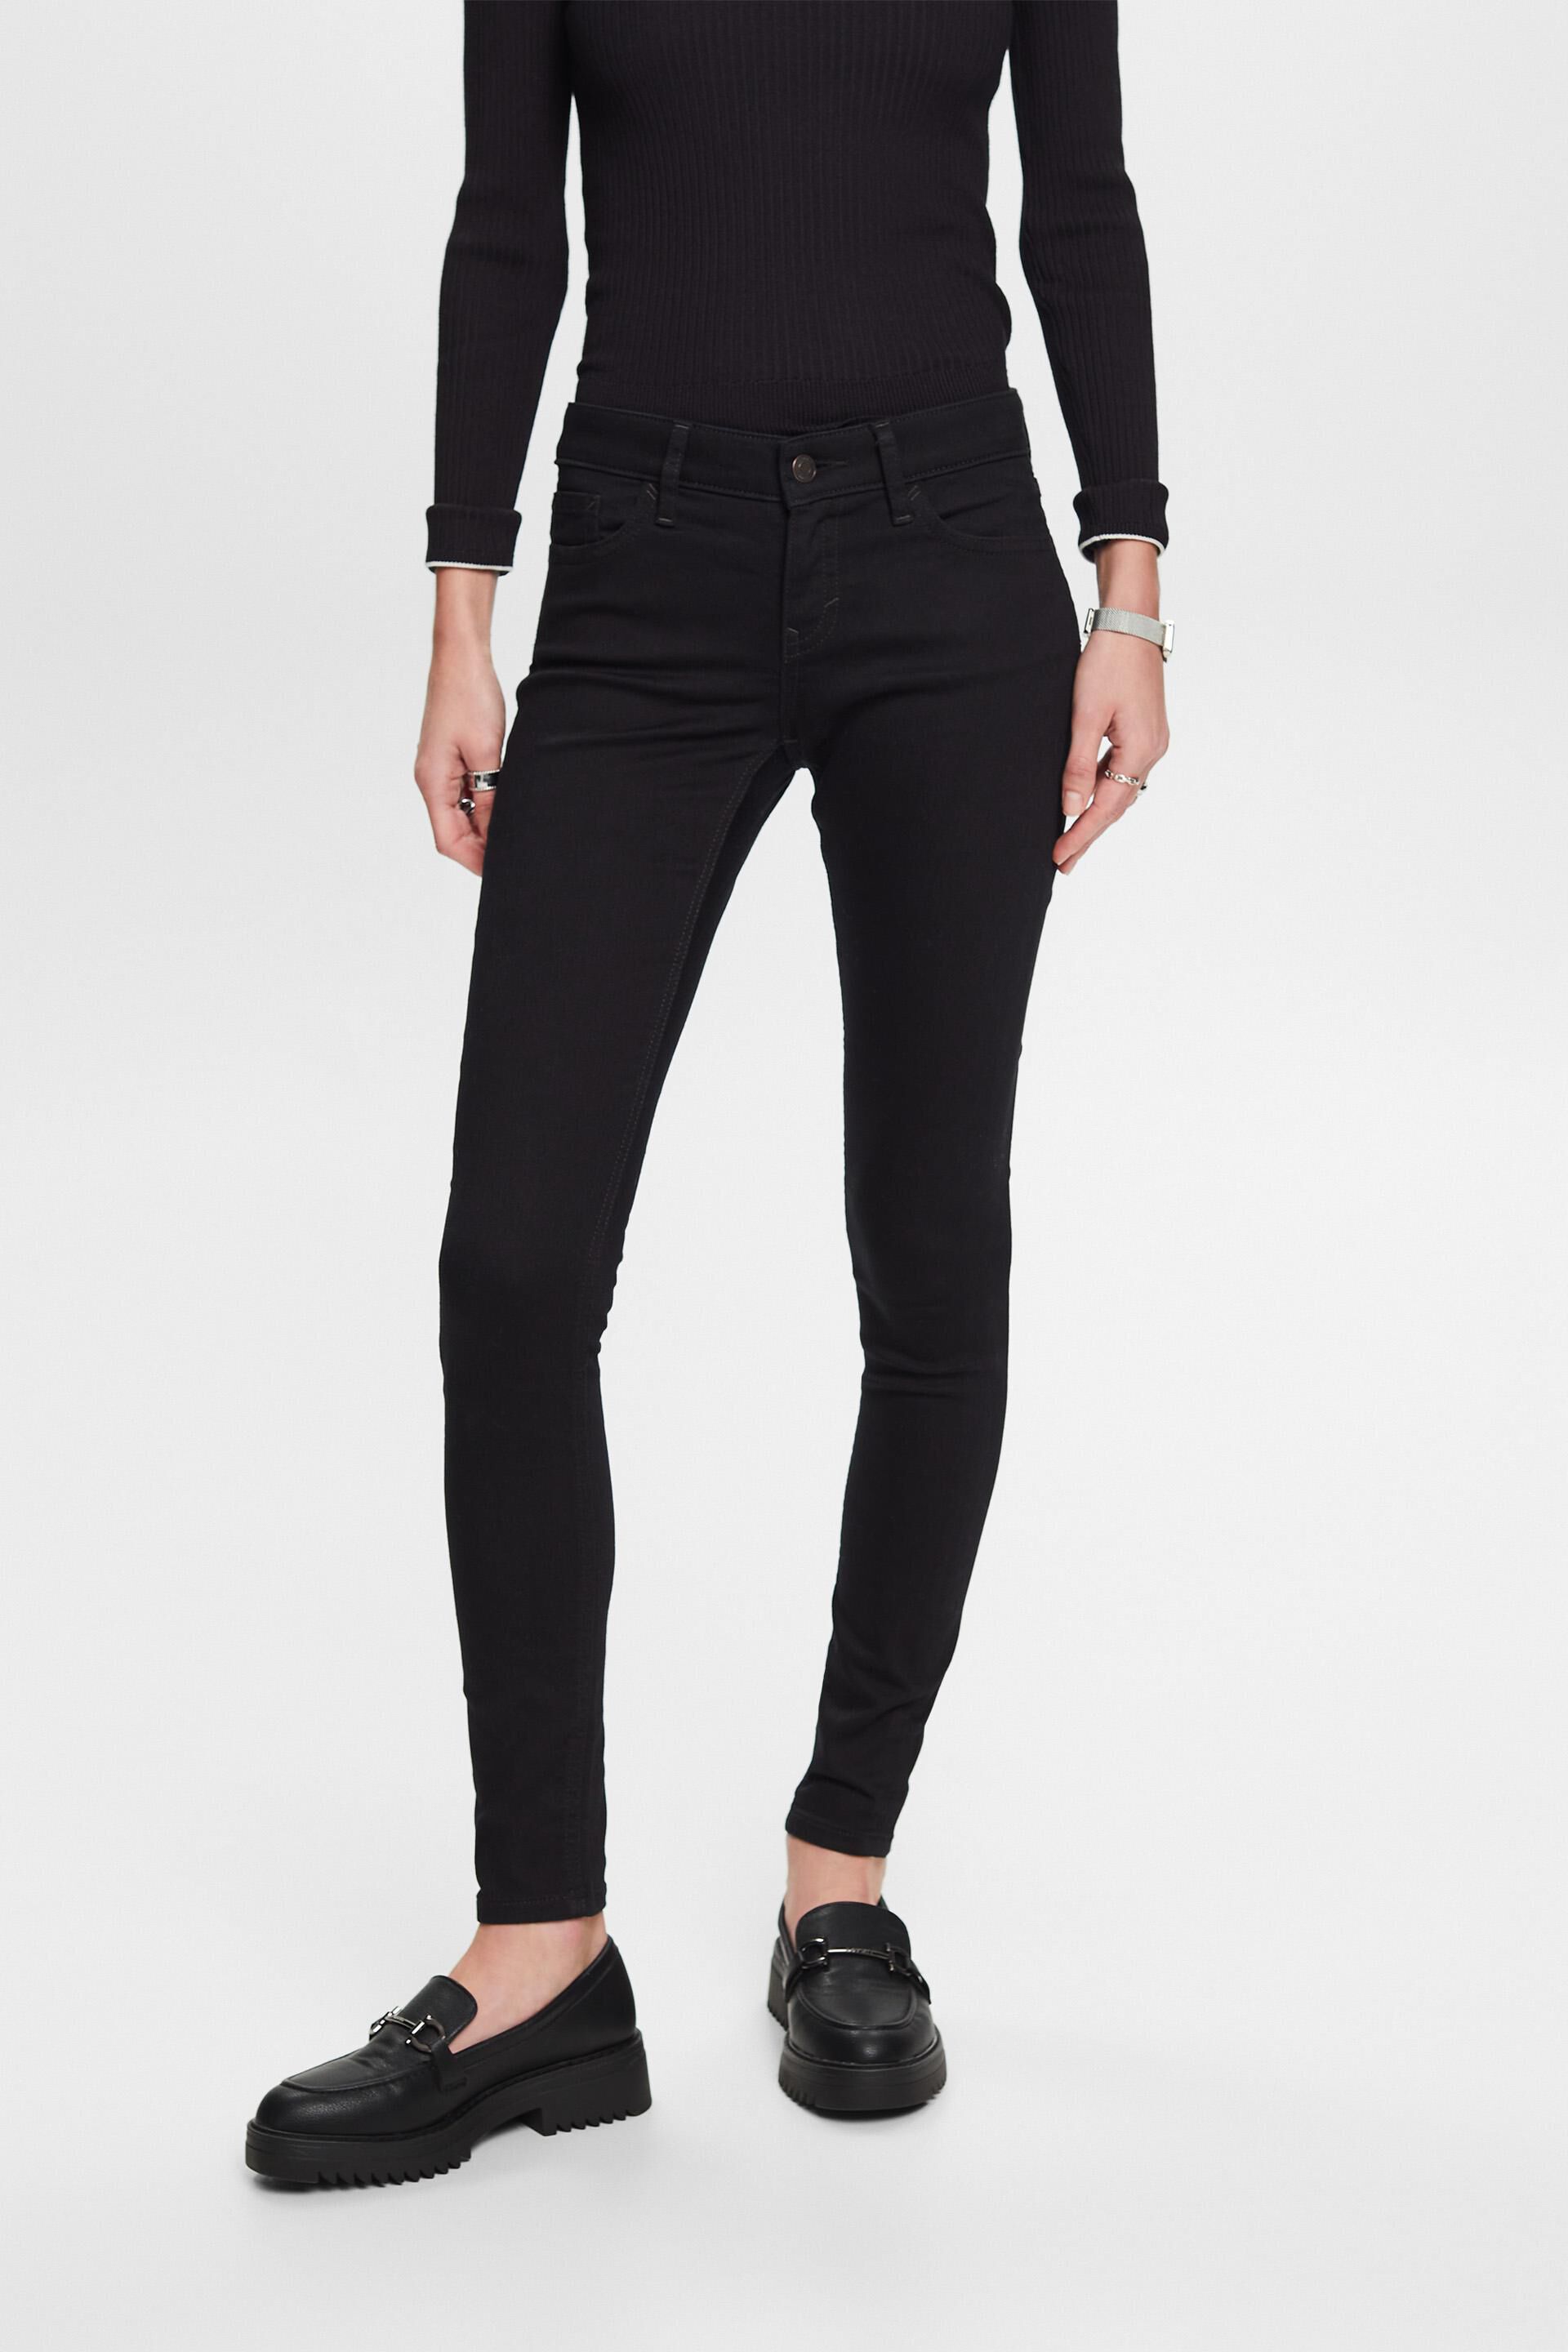 Esprit Damen Low-rise skinny jeans